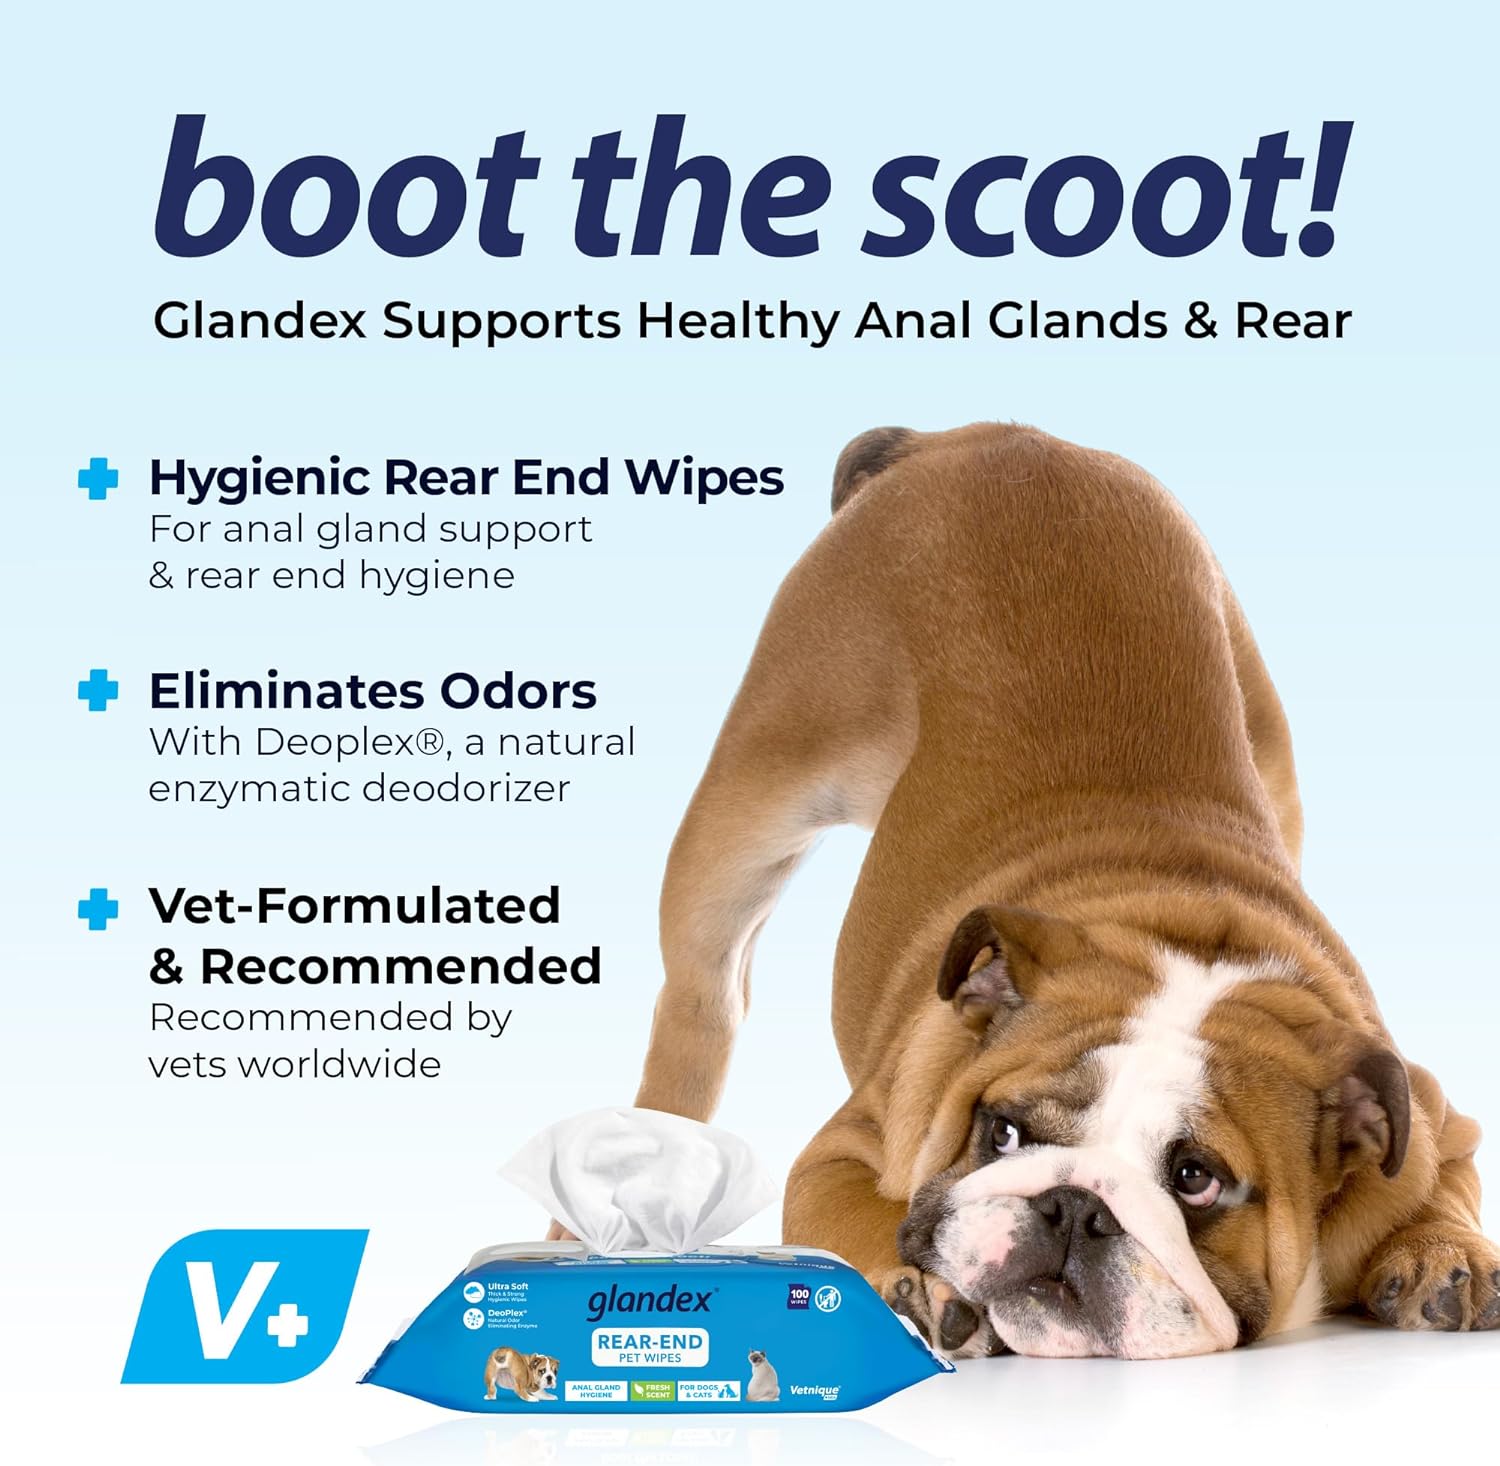 Vetnique Labs Glandex® Anal Gland Hygienic Pet Wipes - 100Ct